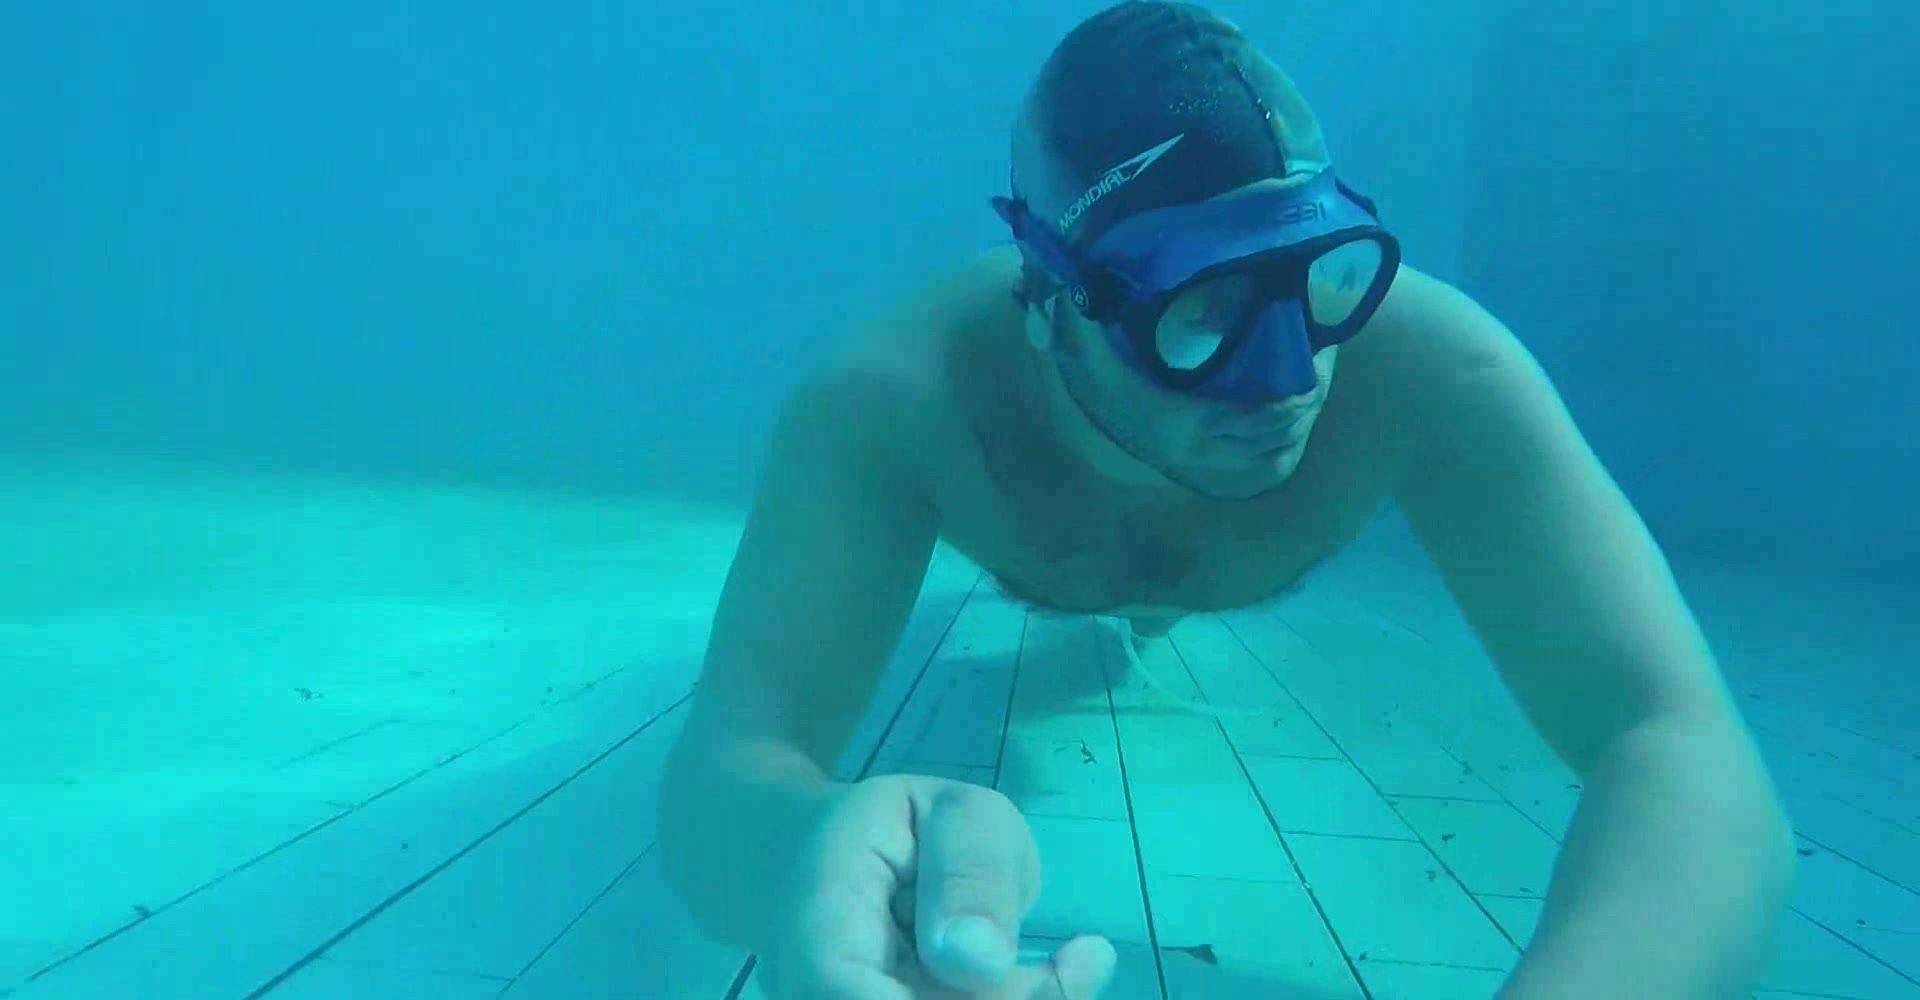 Kareem breatholding underwater with mask